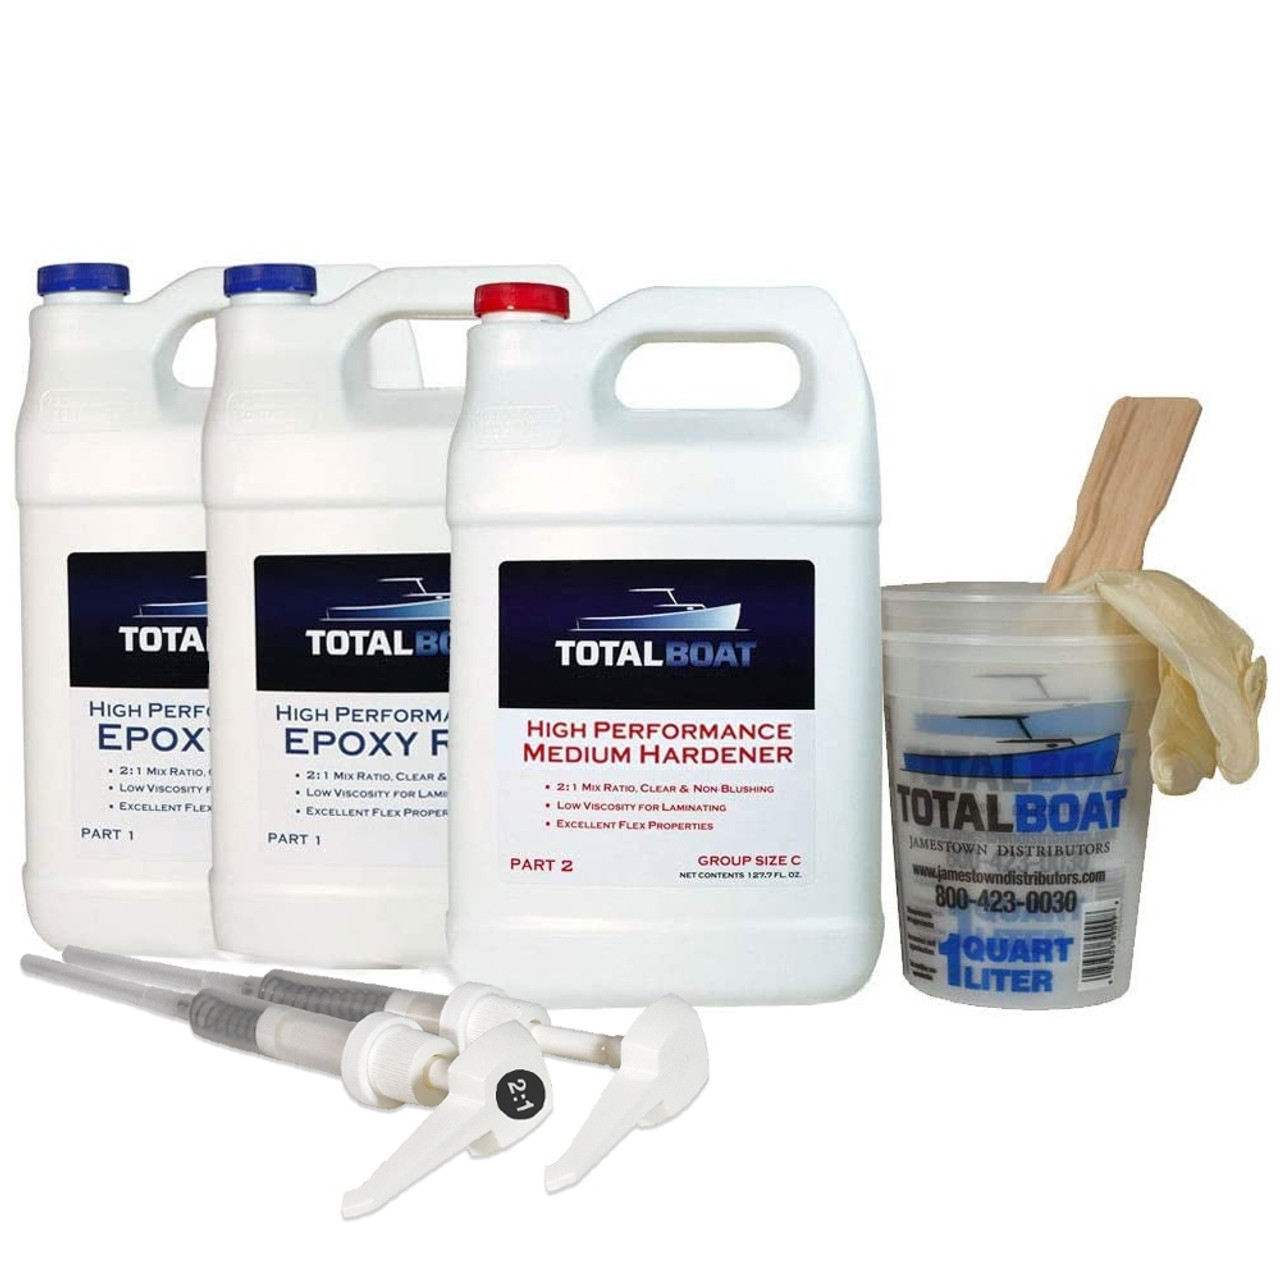 TotalBoat Clear High Performance Epoxy Resin Kits A - Quart Kit / Medium